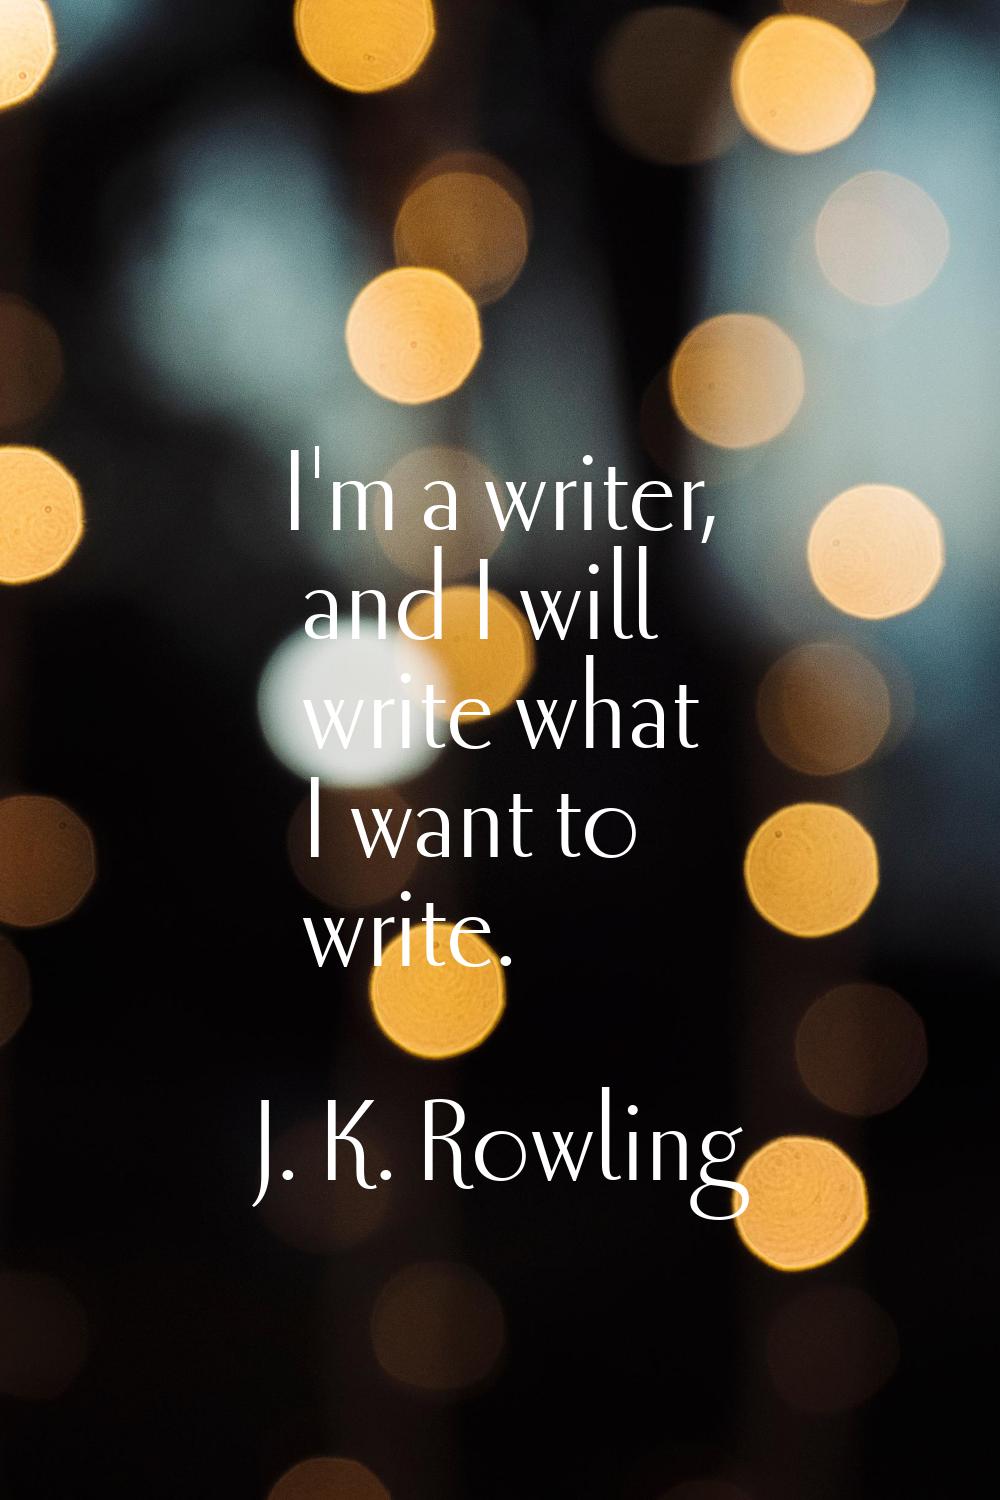 I'm a writer, and I will write what I want to write.